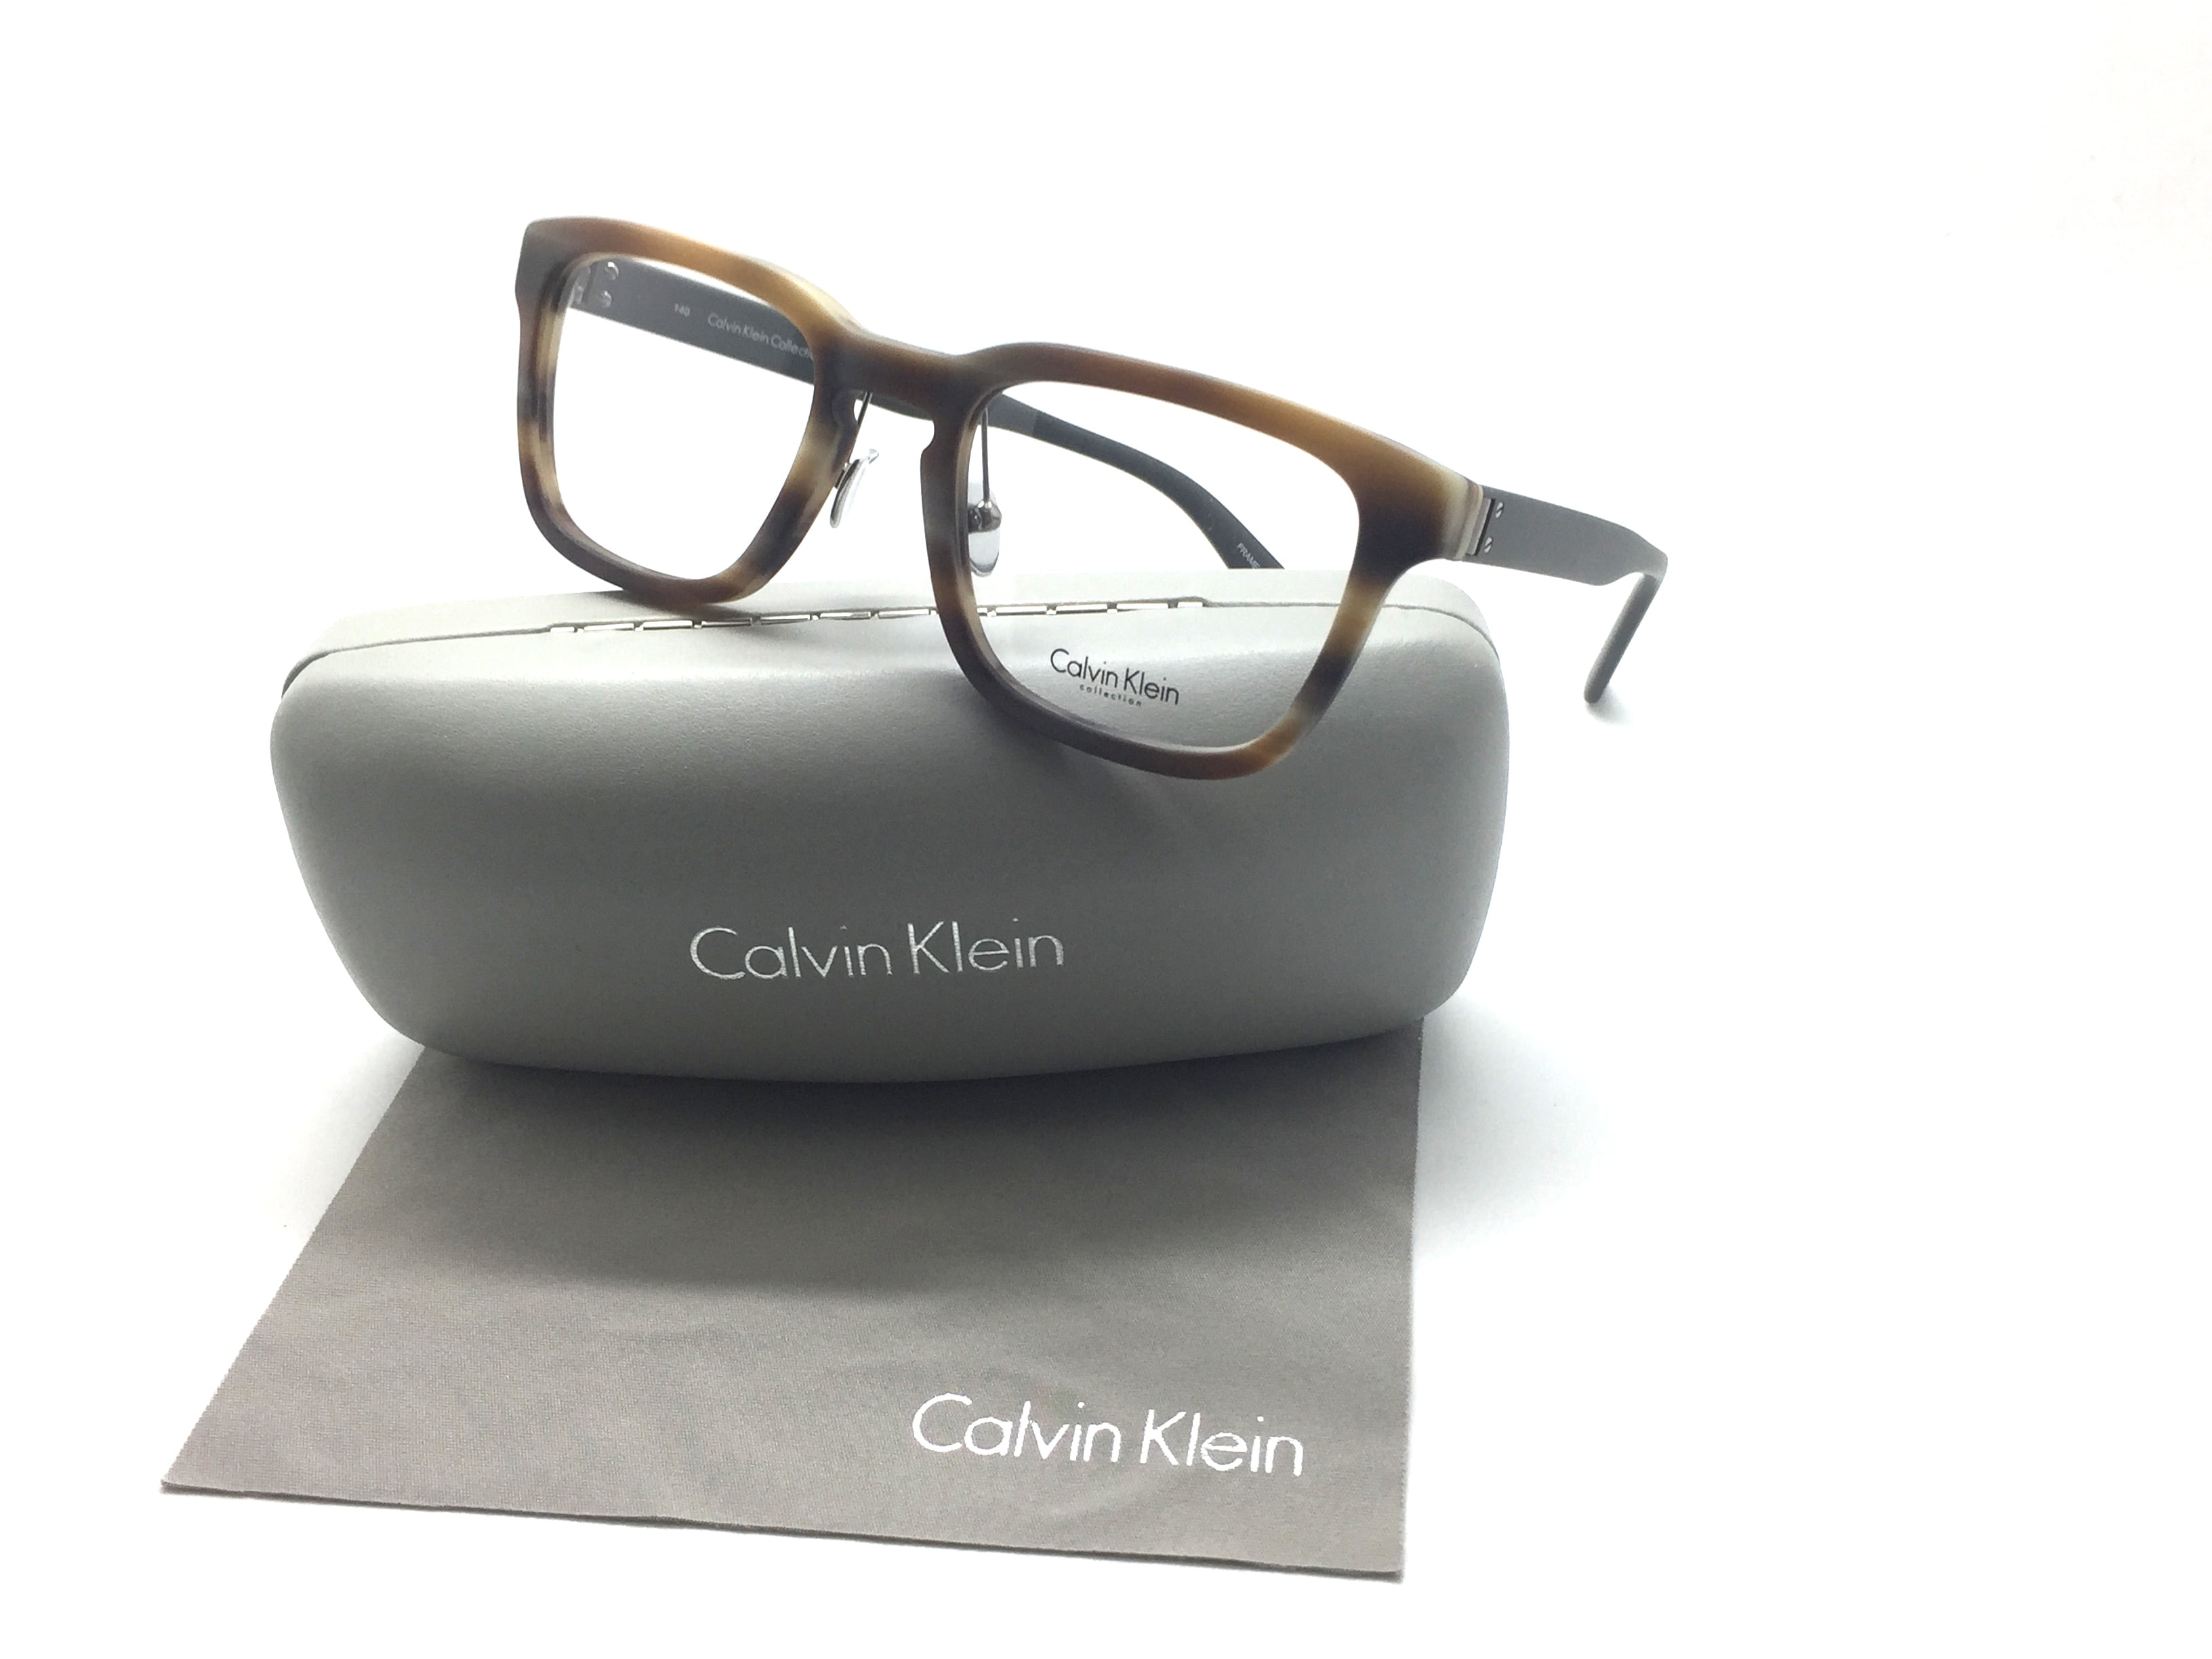 Calvin Klein 140 Frames Top Sellers, SAVE 55%.